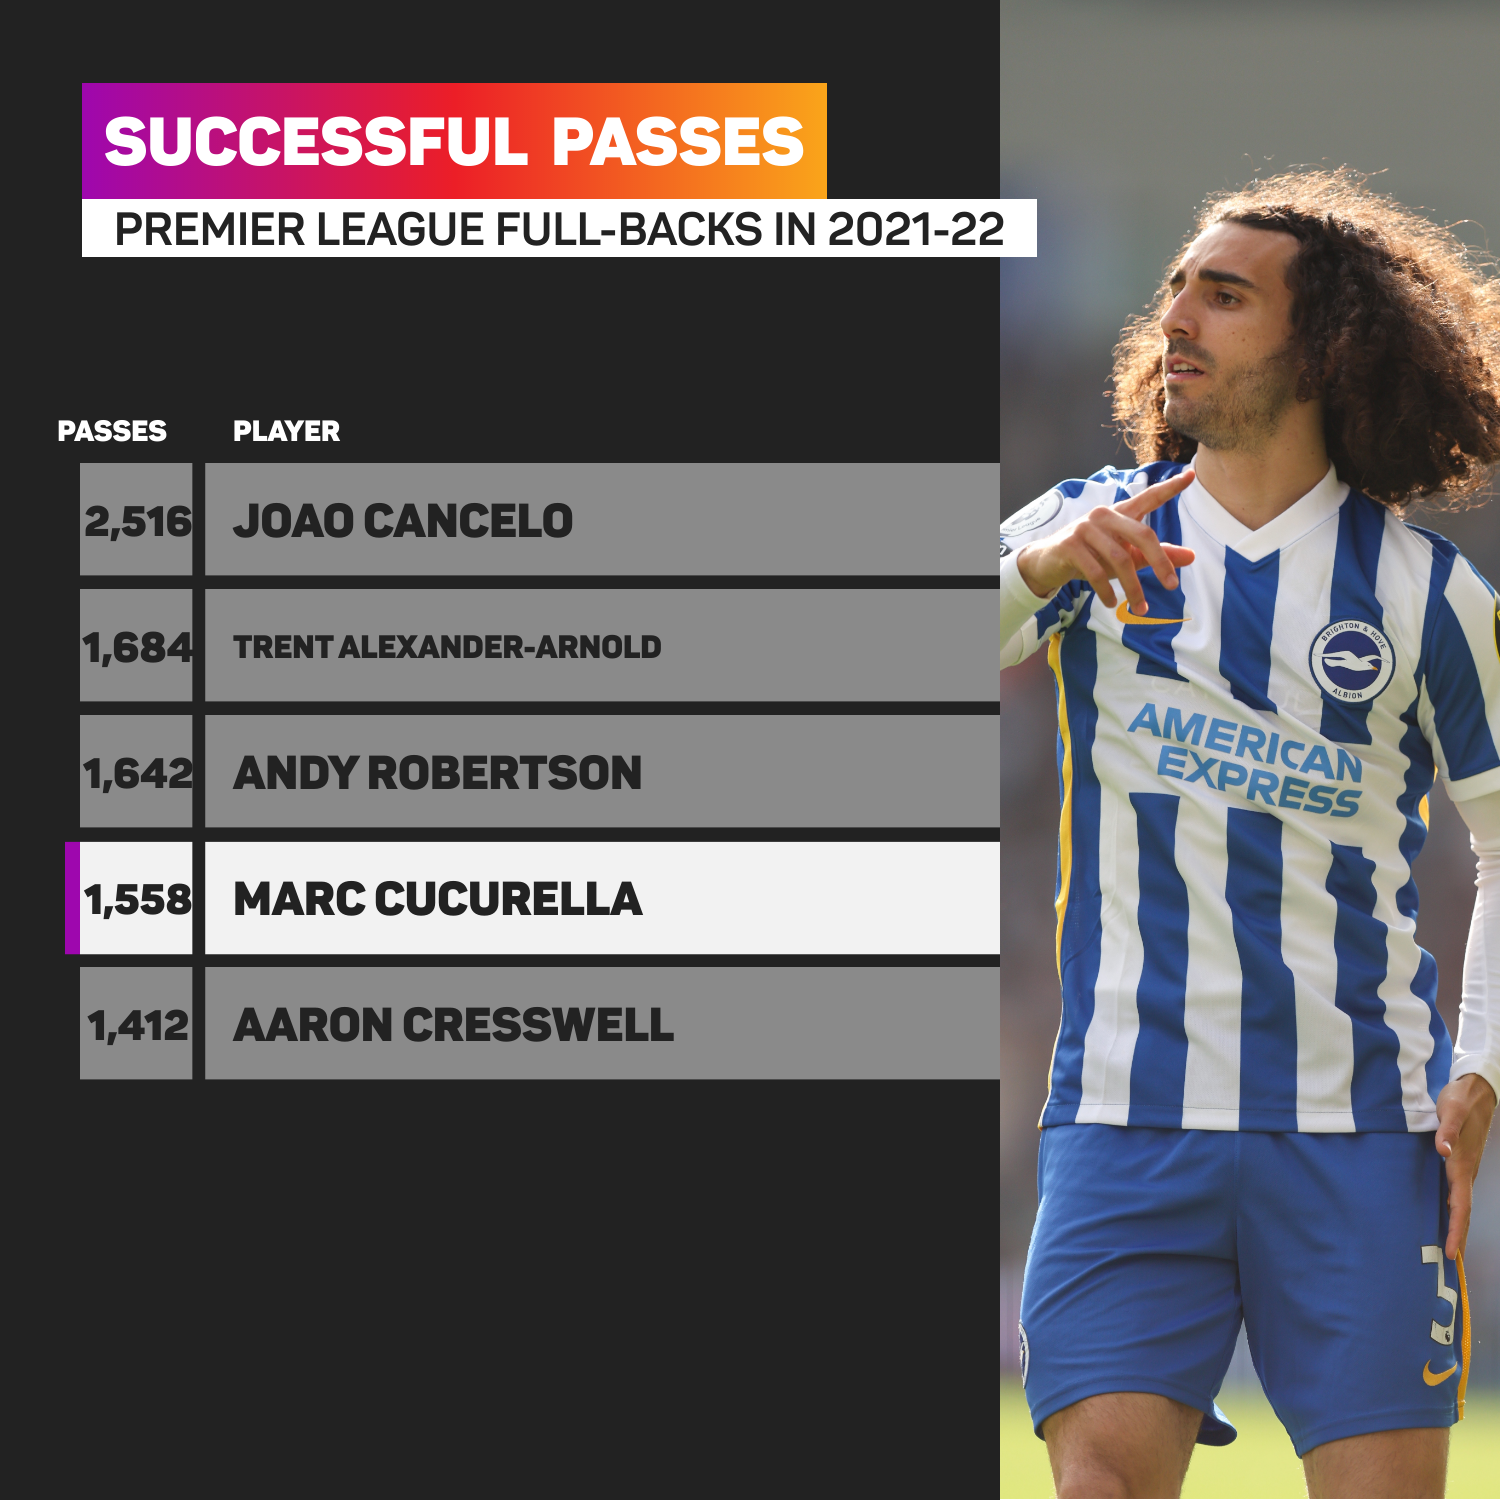 Marc Cucurella completed 1,558 passes last season